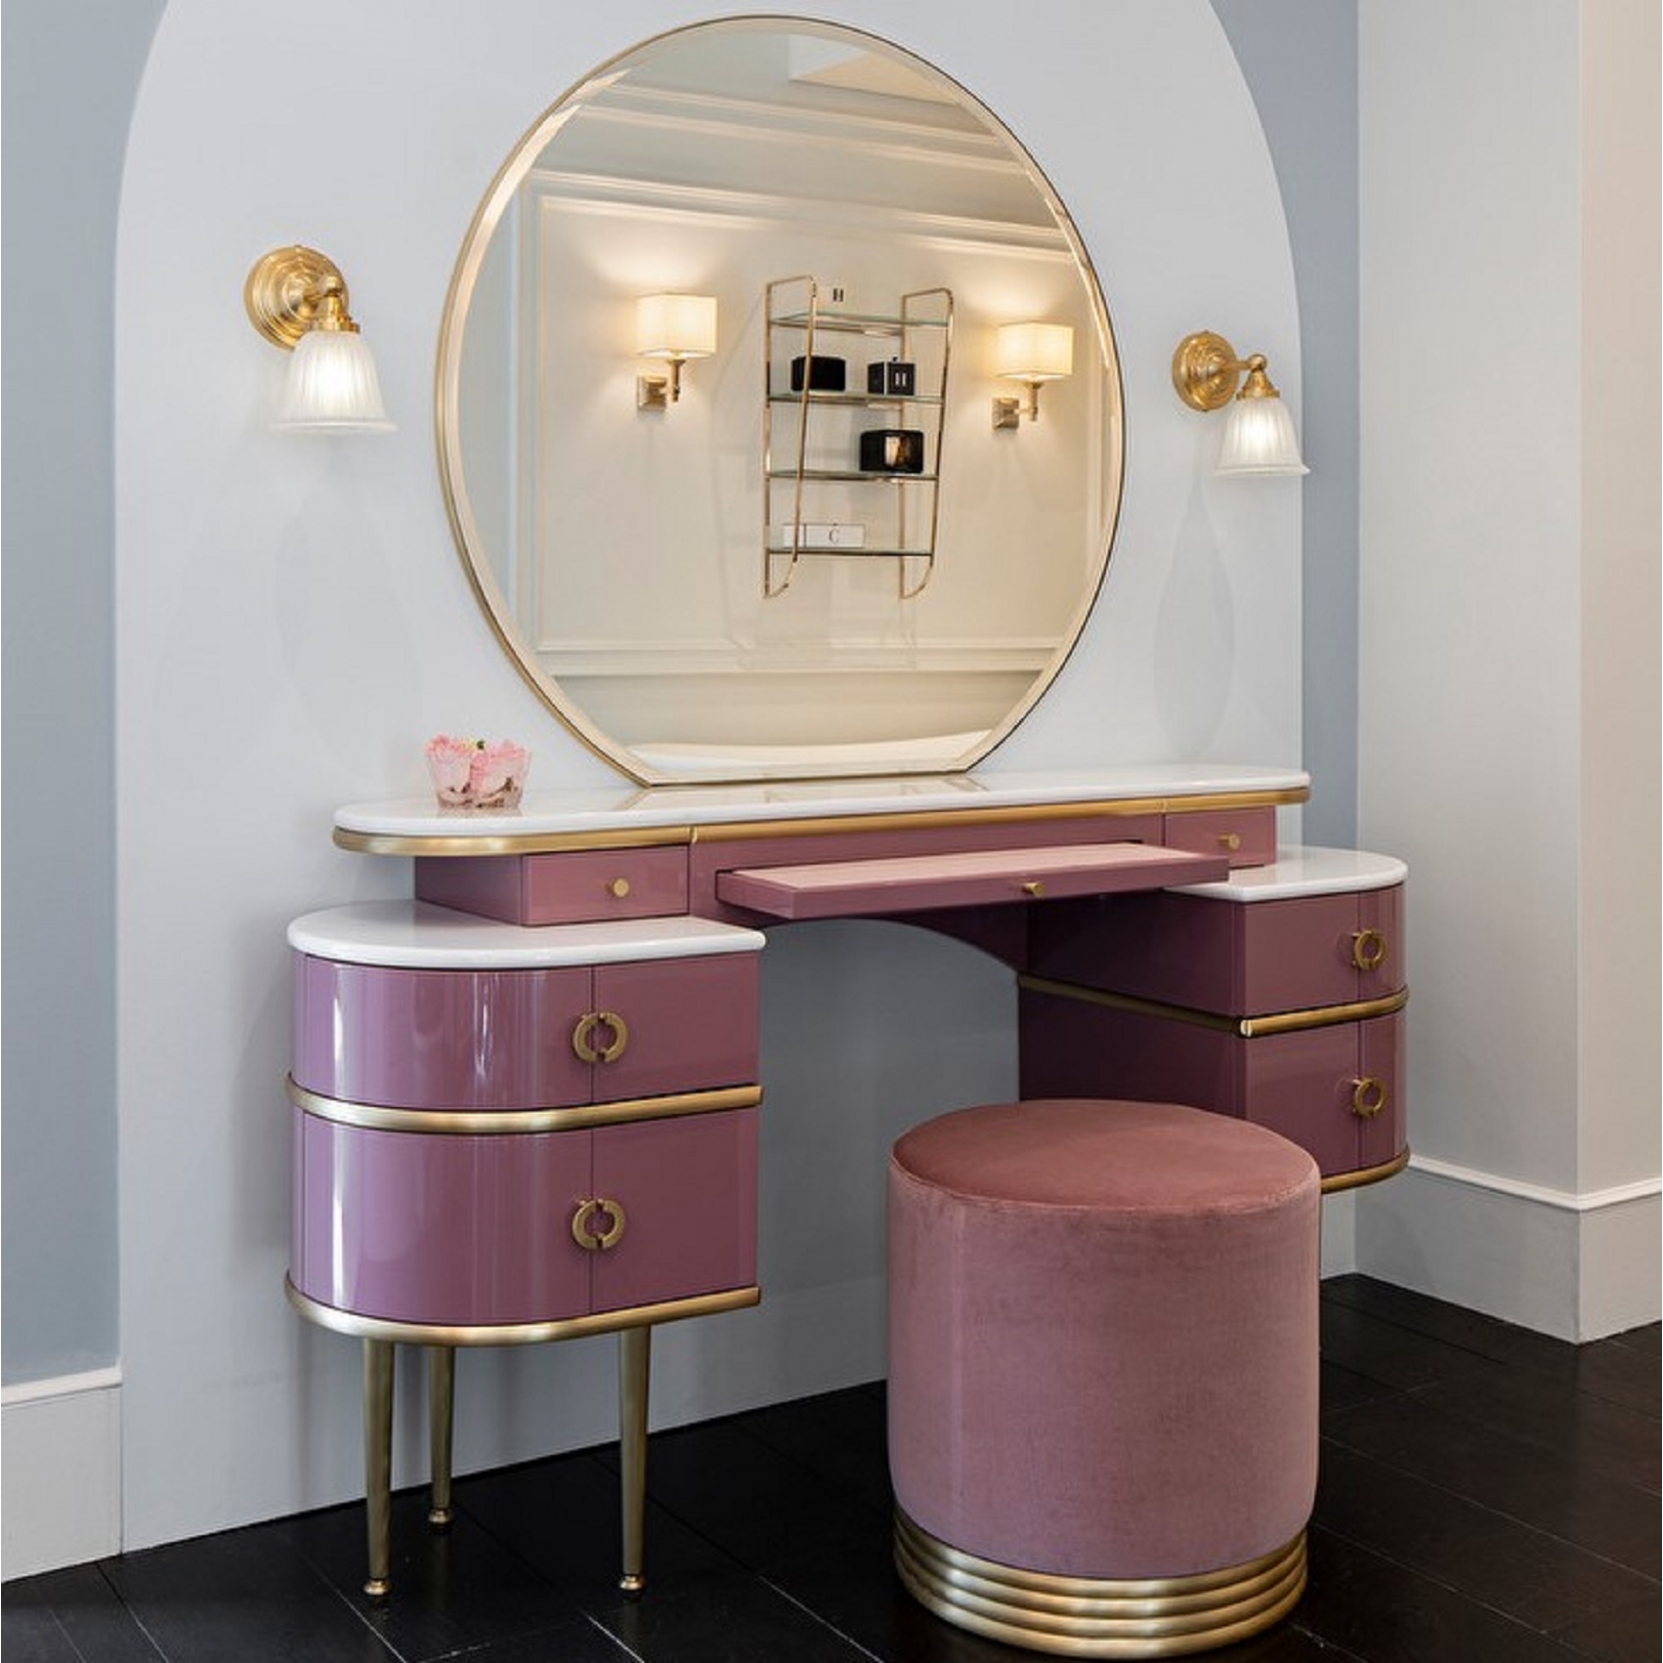 Devon Zelda Vanity Table, Bathroom Vanity Desk With Drawers